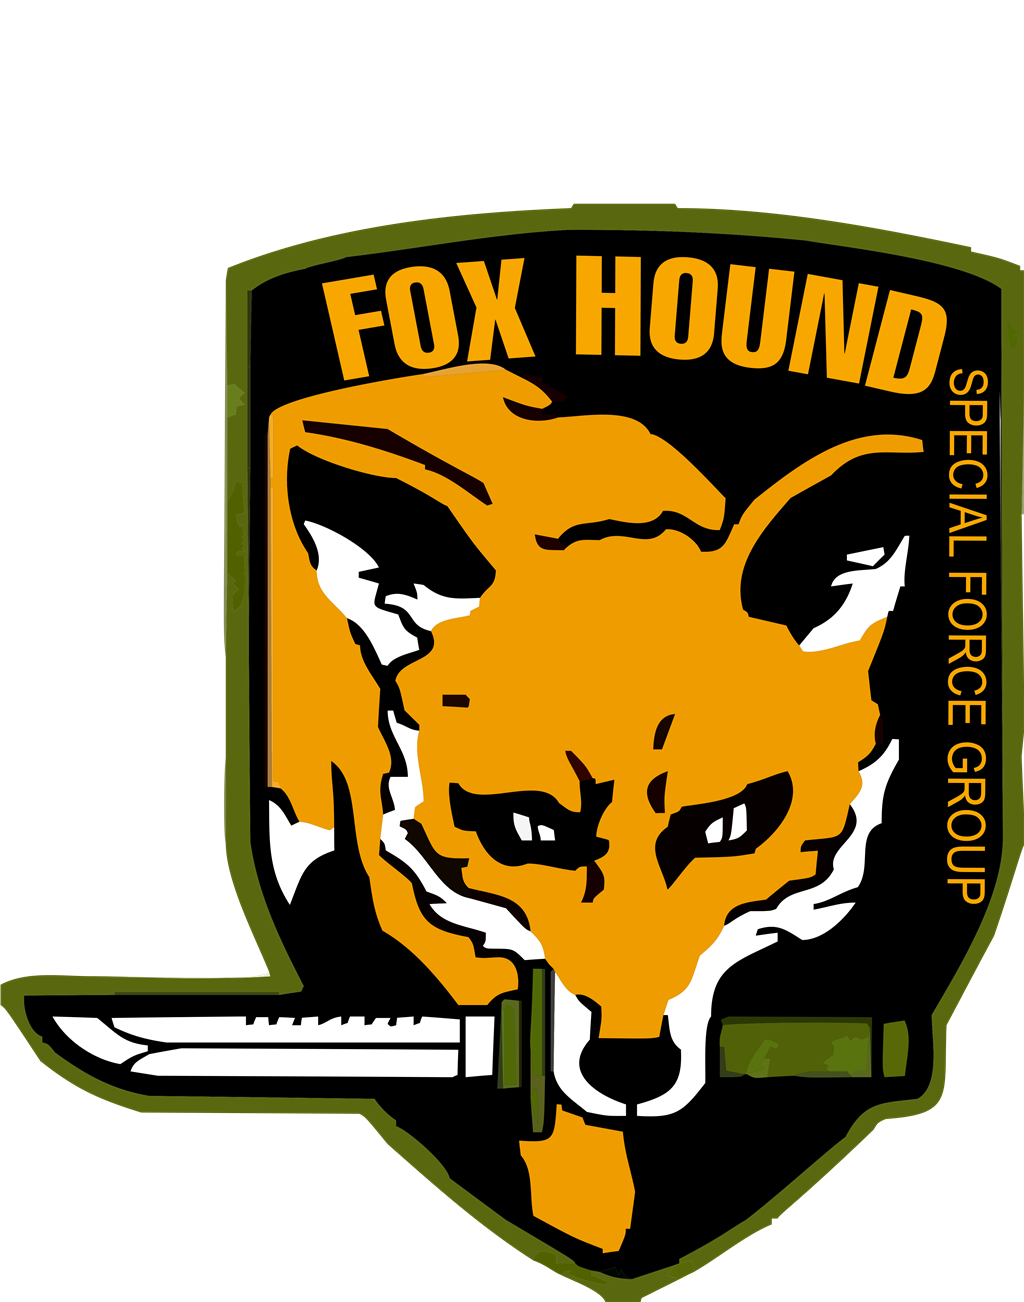 Metal Gear Solid Foxhound logotype, transparent .png, medium, large